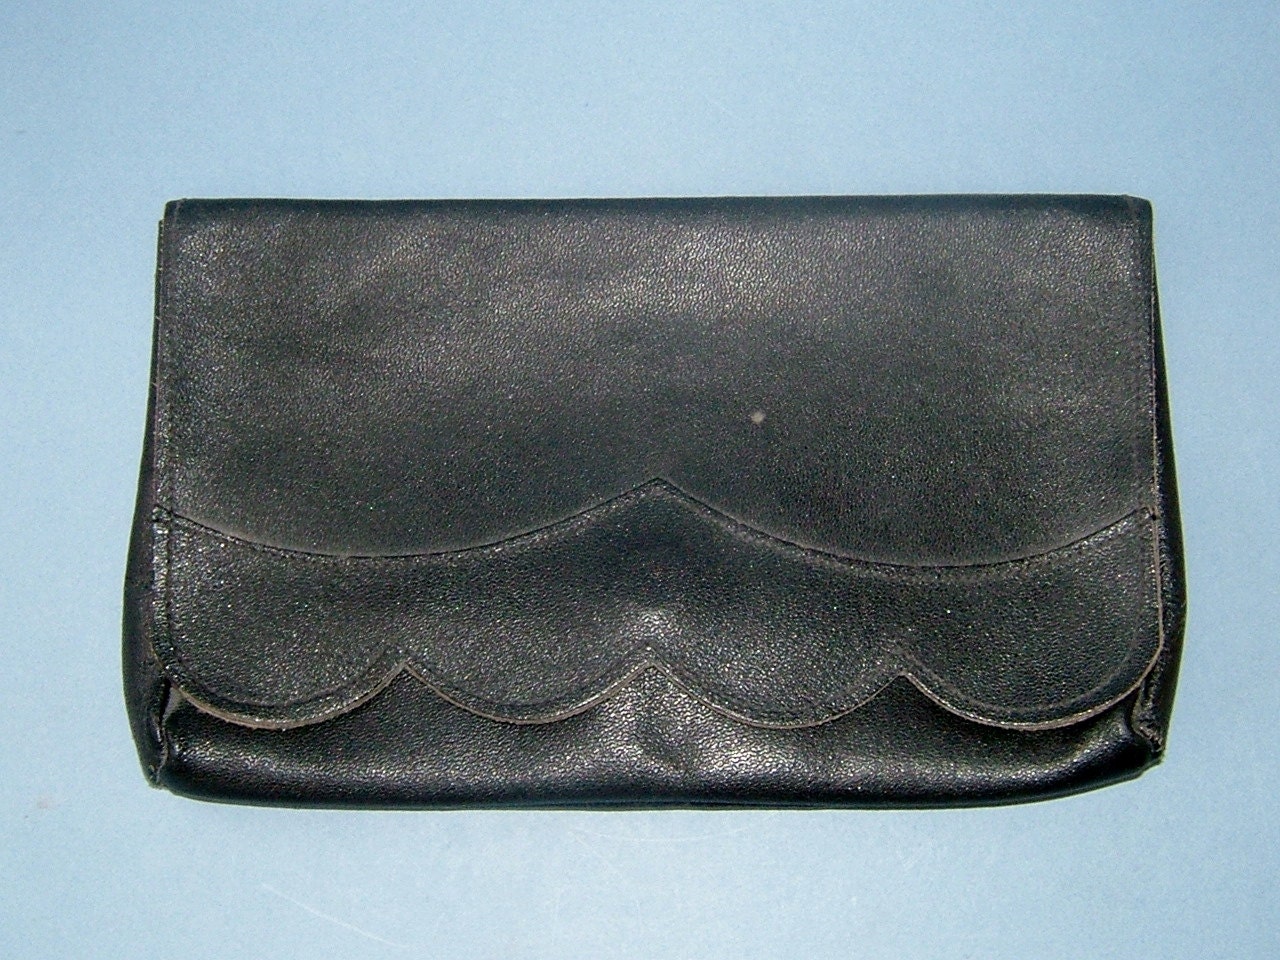 1960s Black Leather Clutch Bag Purse Handbag with Scallop Edge